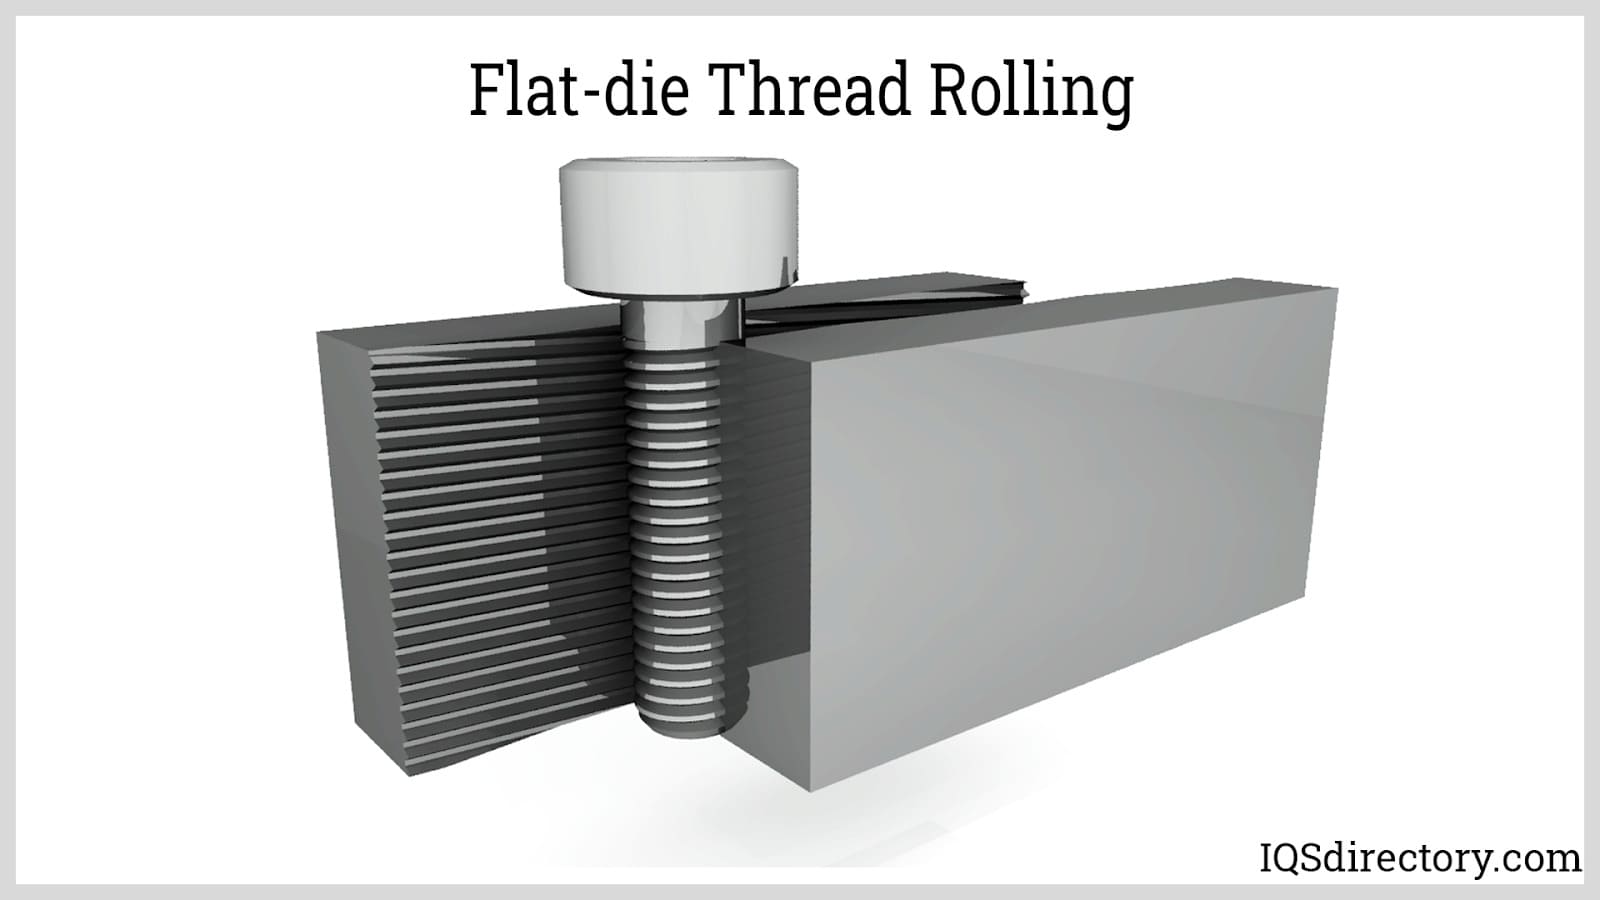 Flat-die Thread Rolling